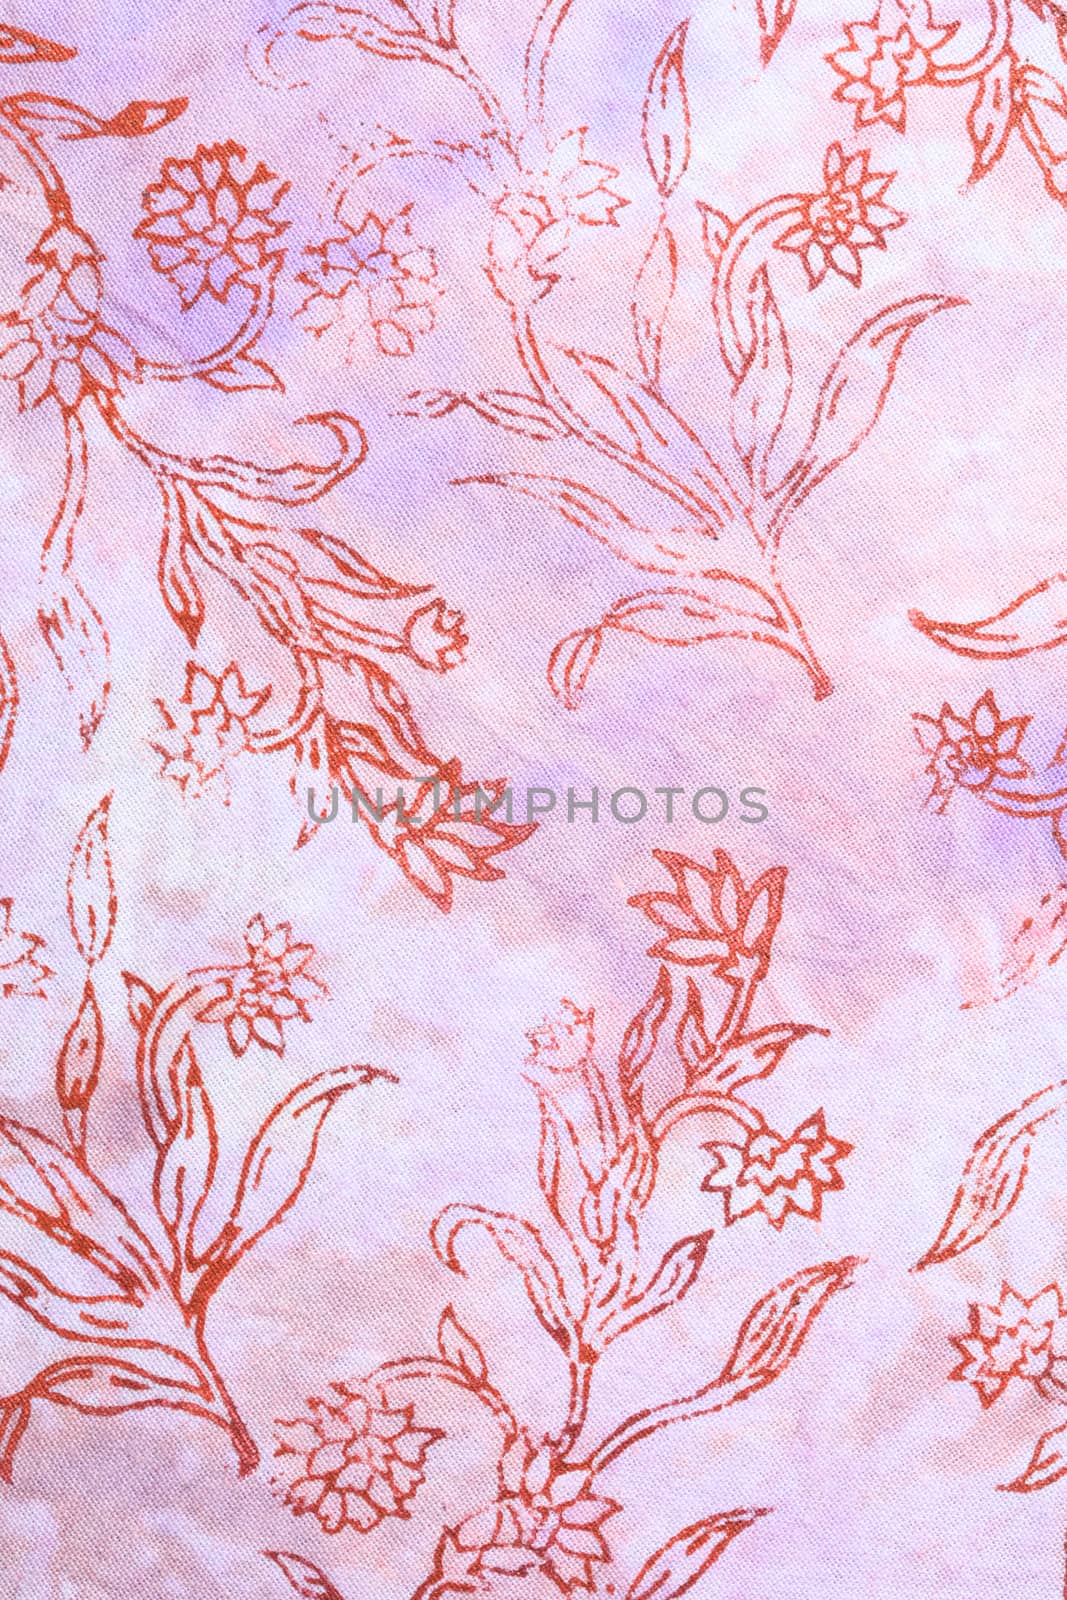 Silk batik with abstract flowers by Garsya